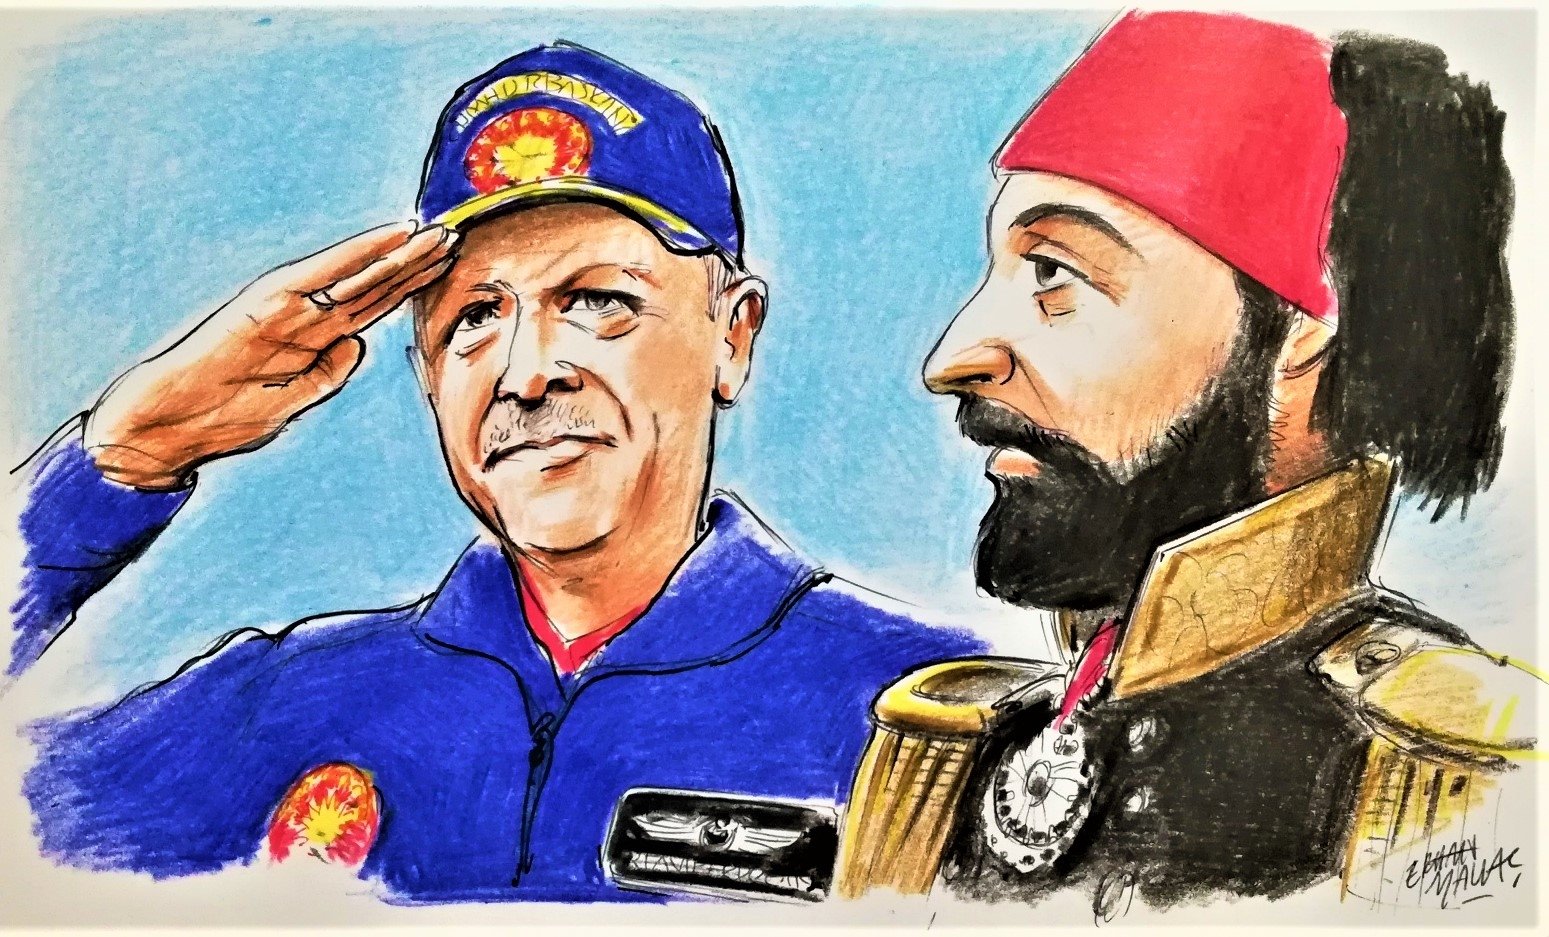 An illustration depicting President Recep Tayyip Erdoğan and Ottoman Sultan Mahmud II by Erhan Yalvaç.